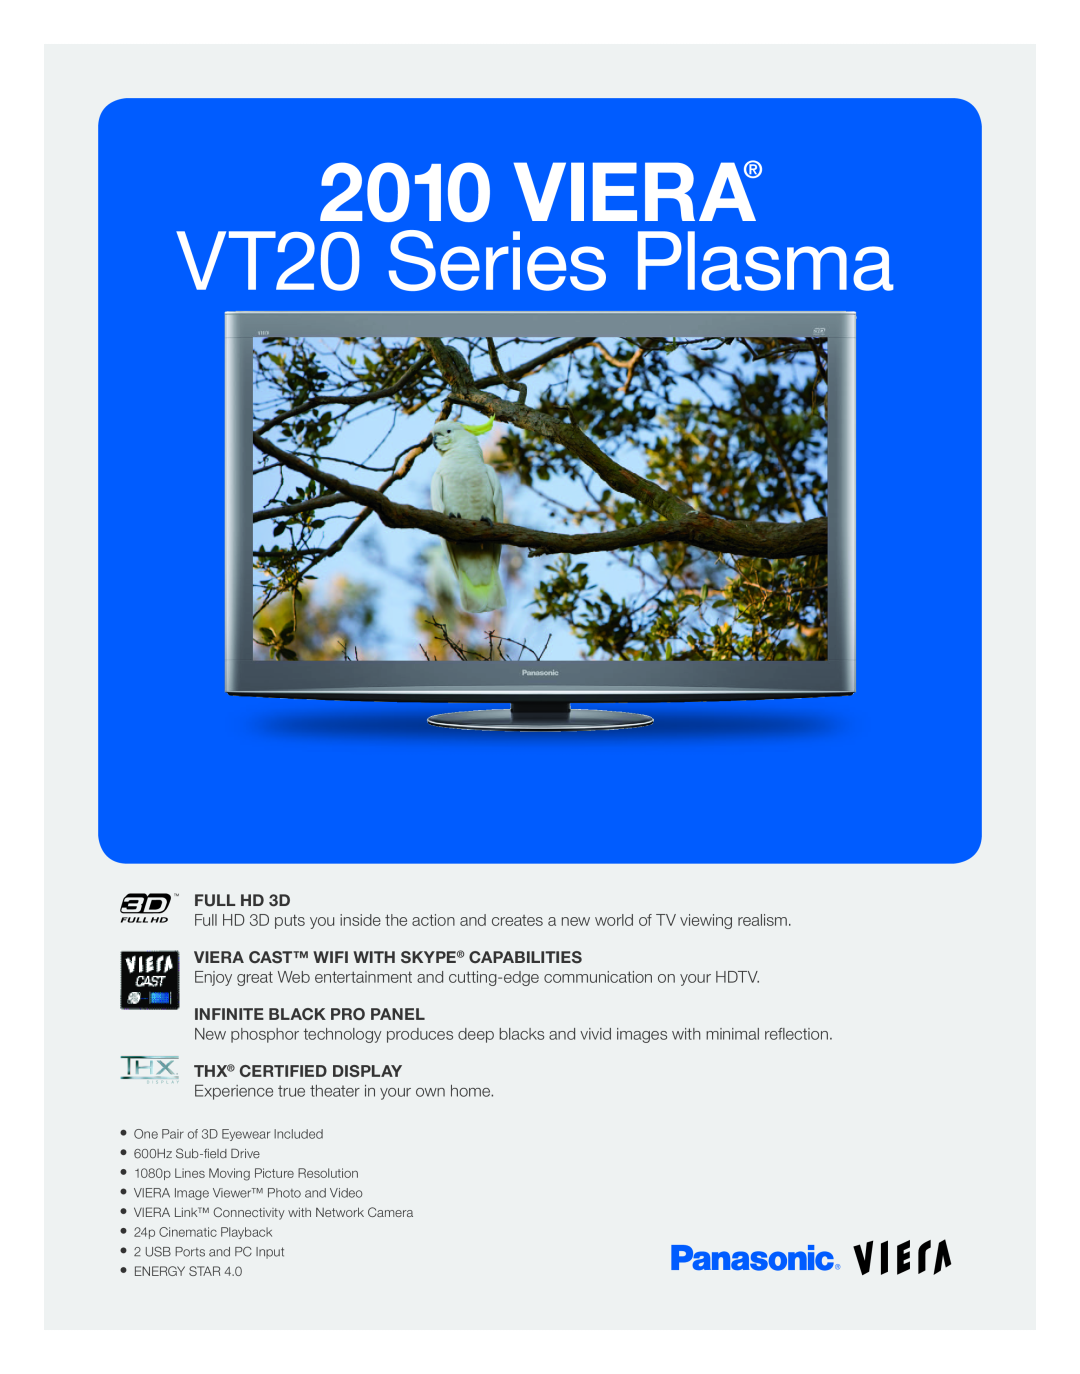 Panasonic TC-P50VT20 manual VT20 Series Plasma, TM Full HD 3D, Viera Cast Wifi With Skype Capabilities 